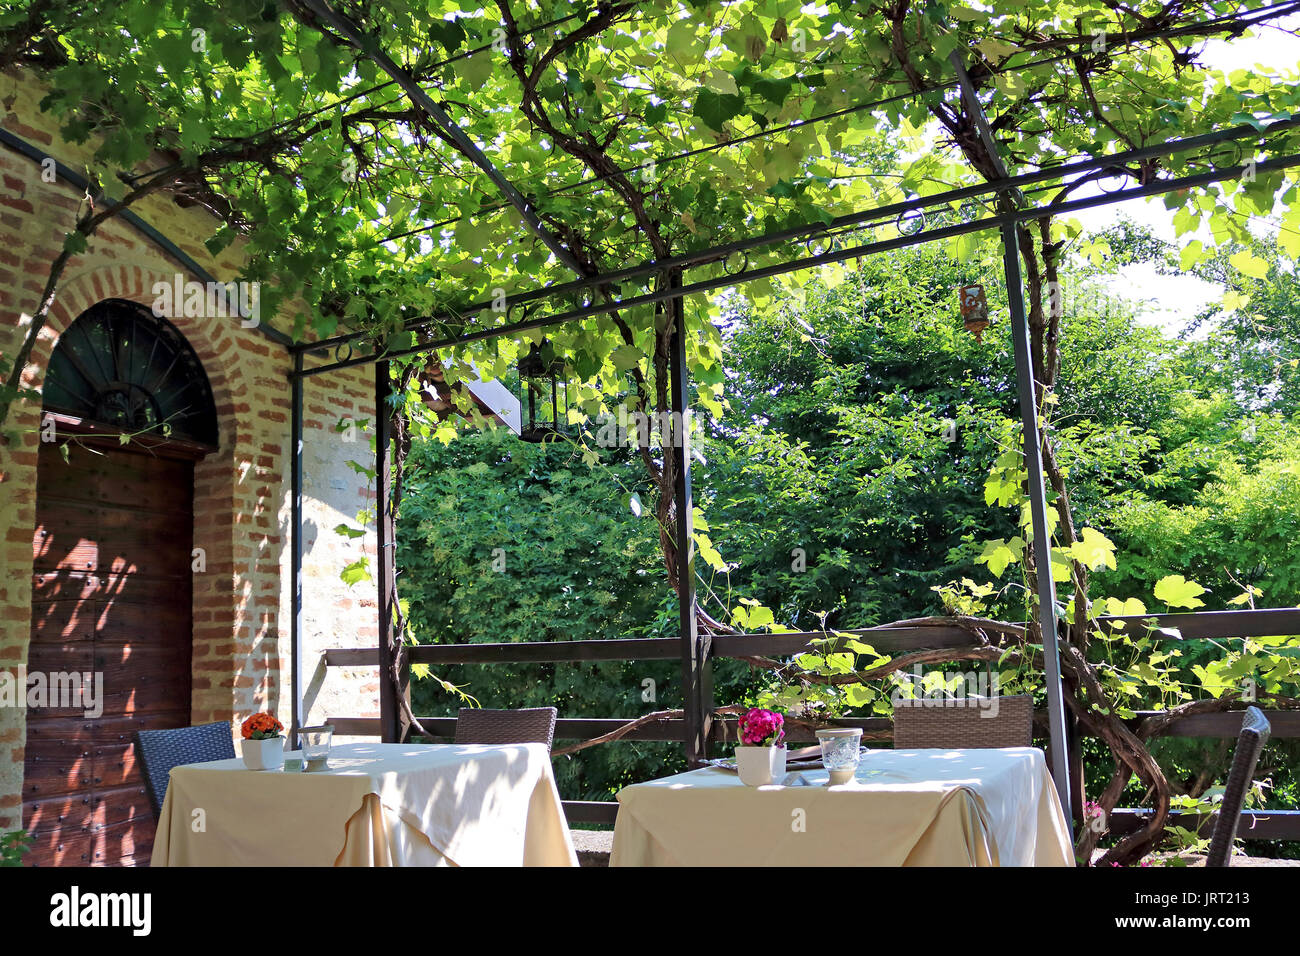 Italian dining in a garden setting Stock Photo